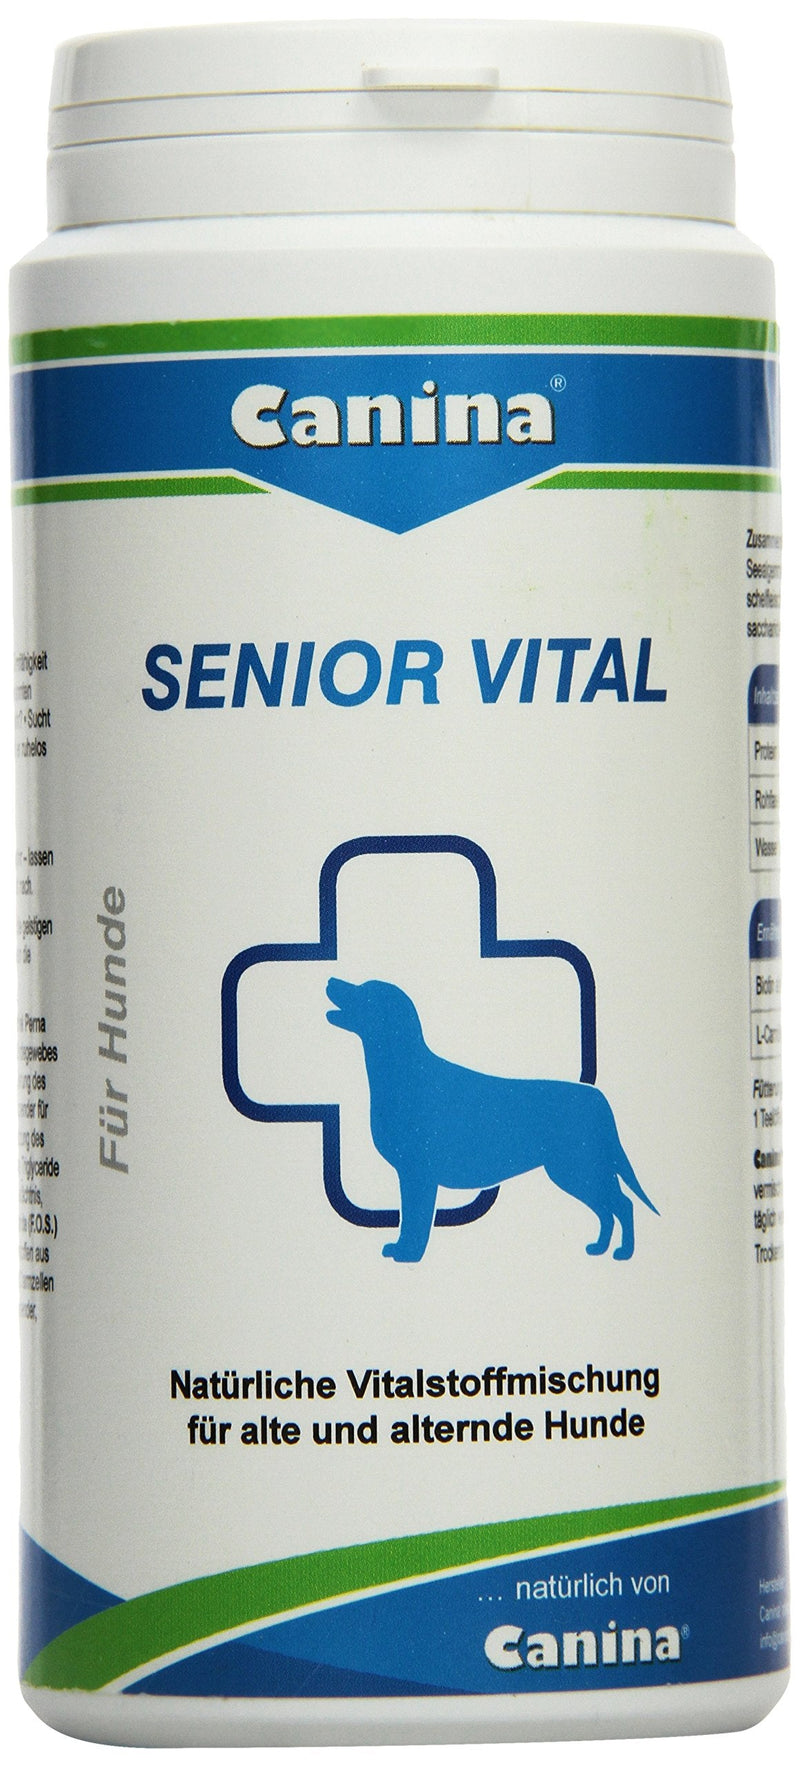 Canina Senior Vital, 1 pack (1 x 0.25 kg) - PawsPlanet Australia